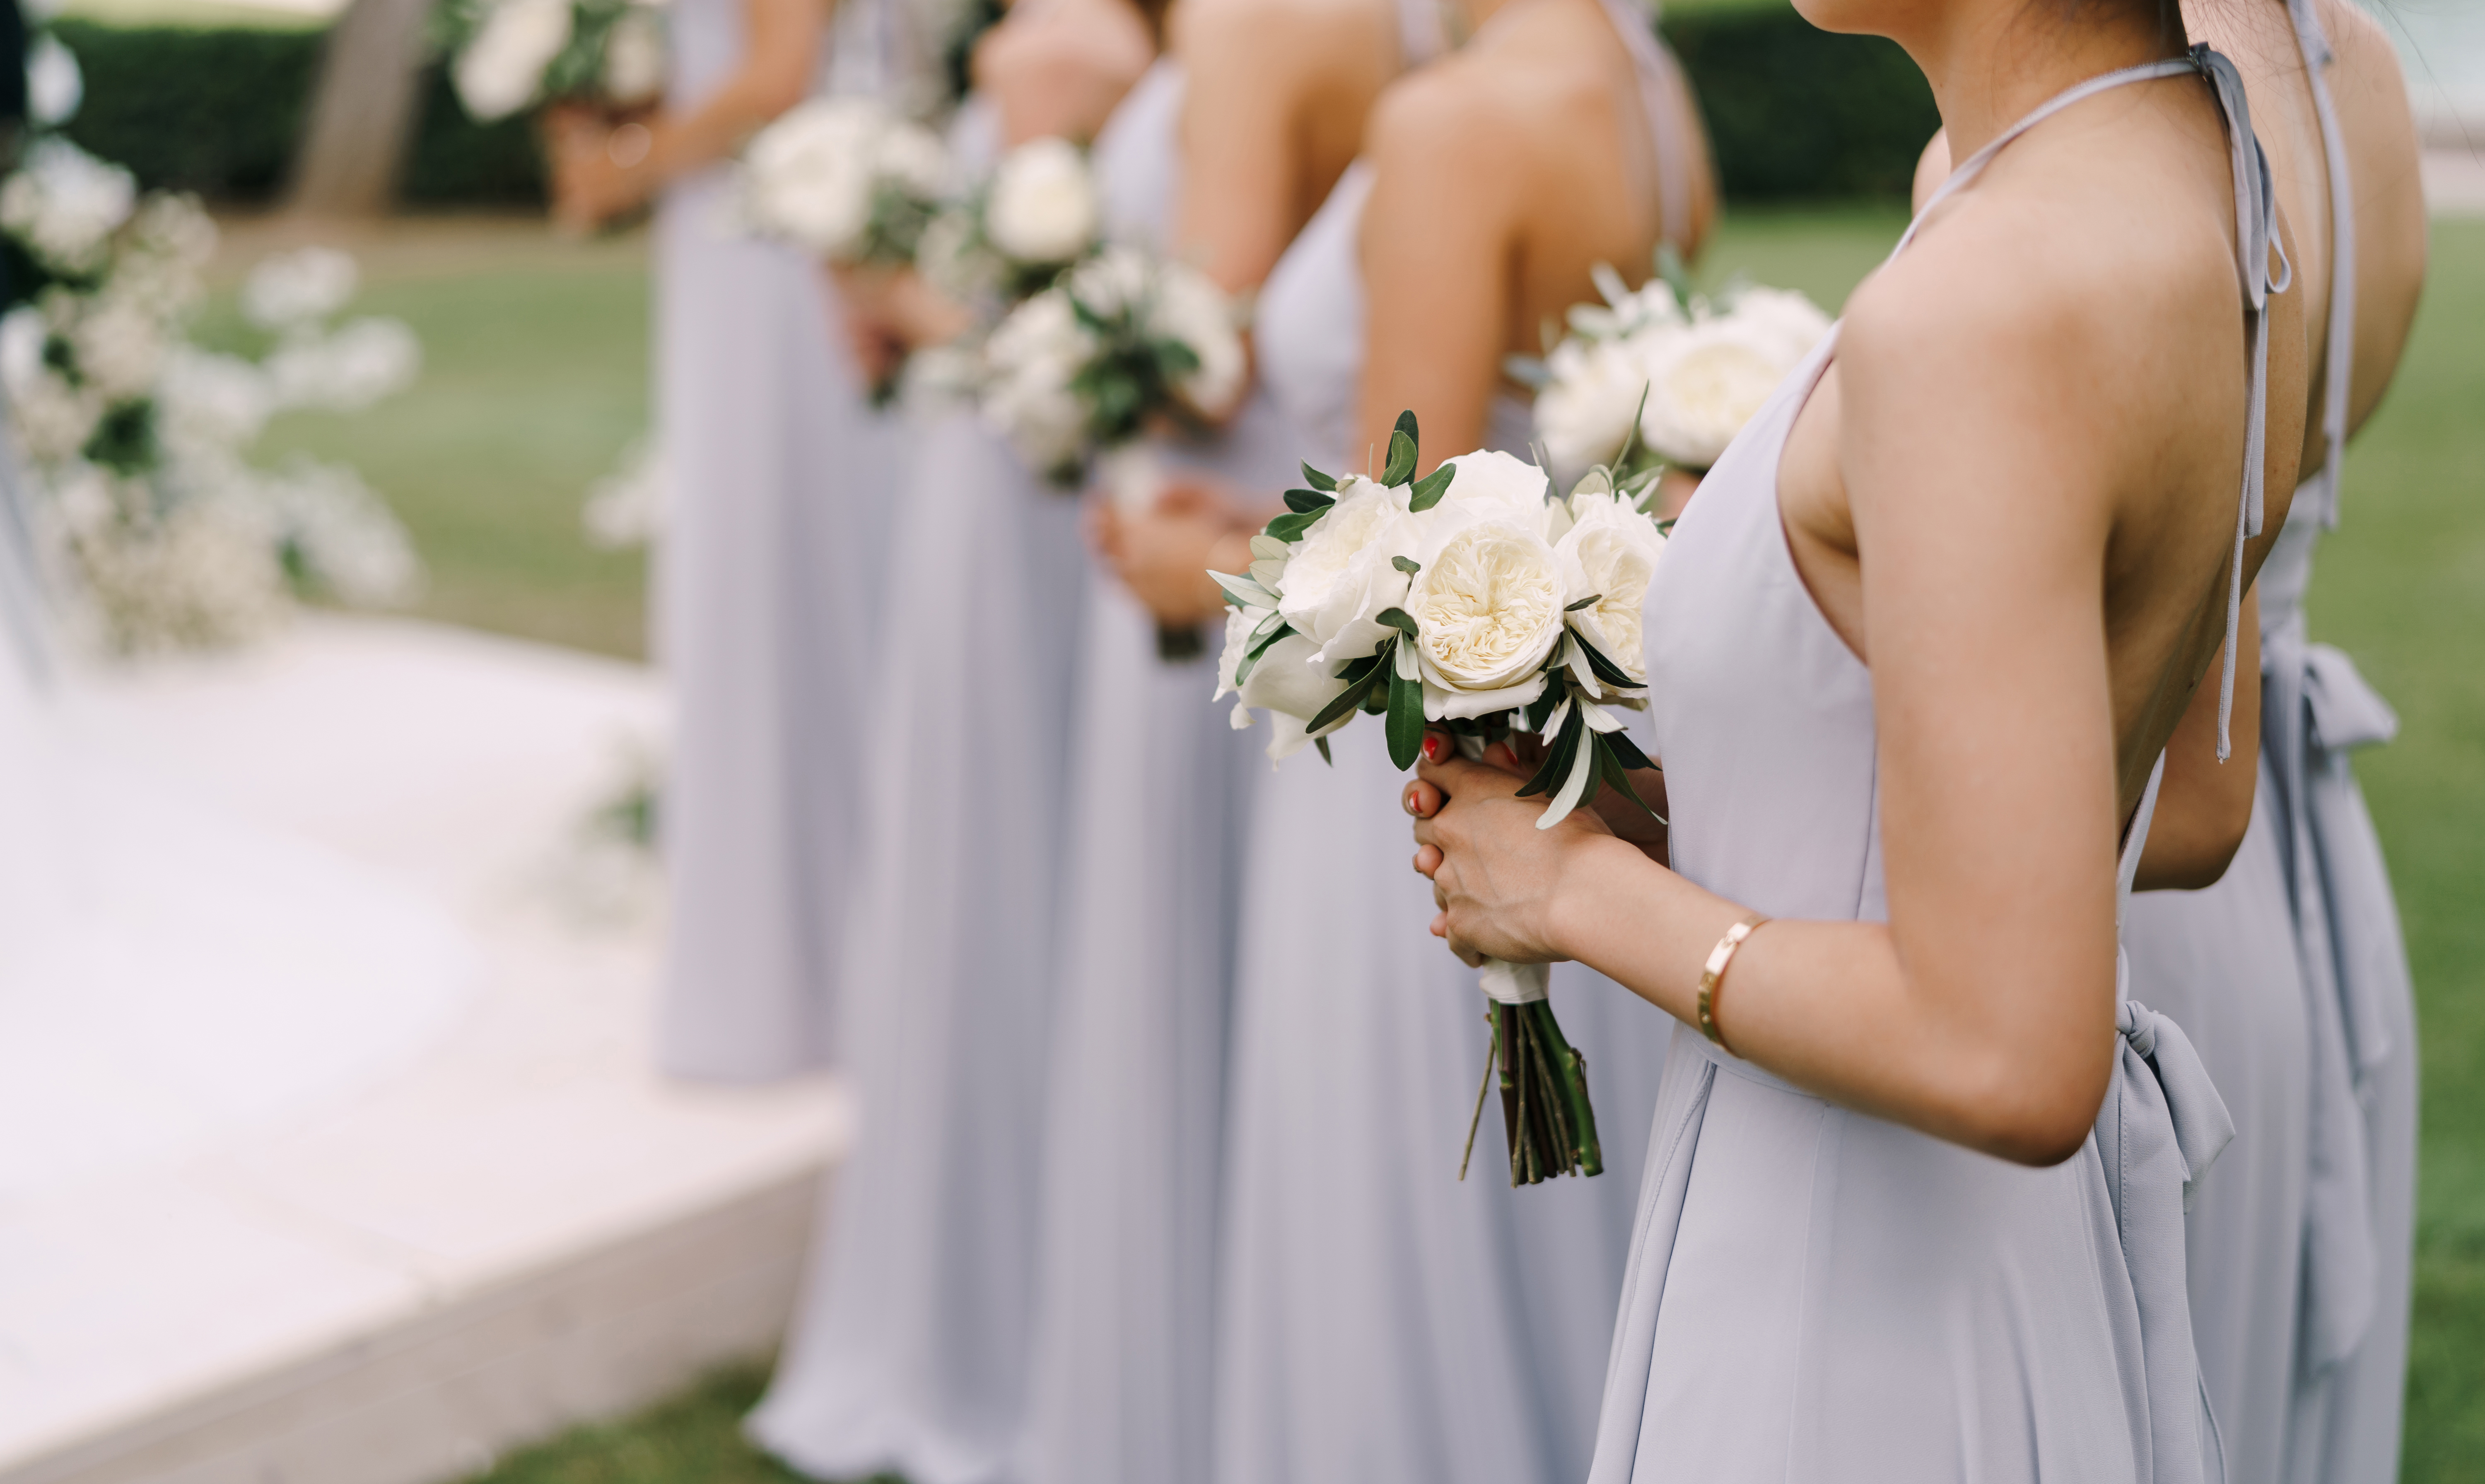 Six bridesmaids holding bouquets | Source: Shutterstock